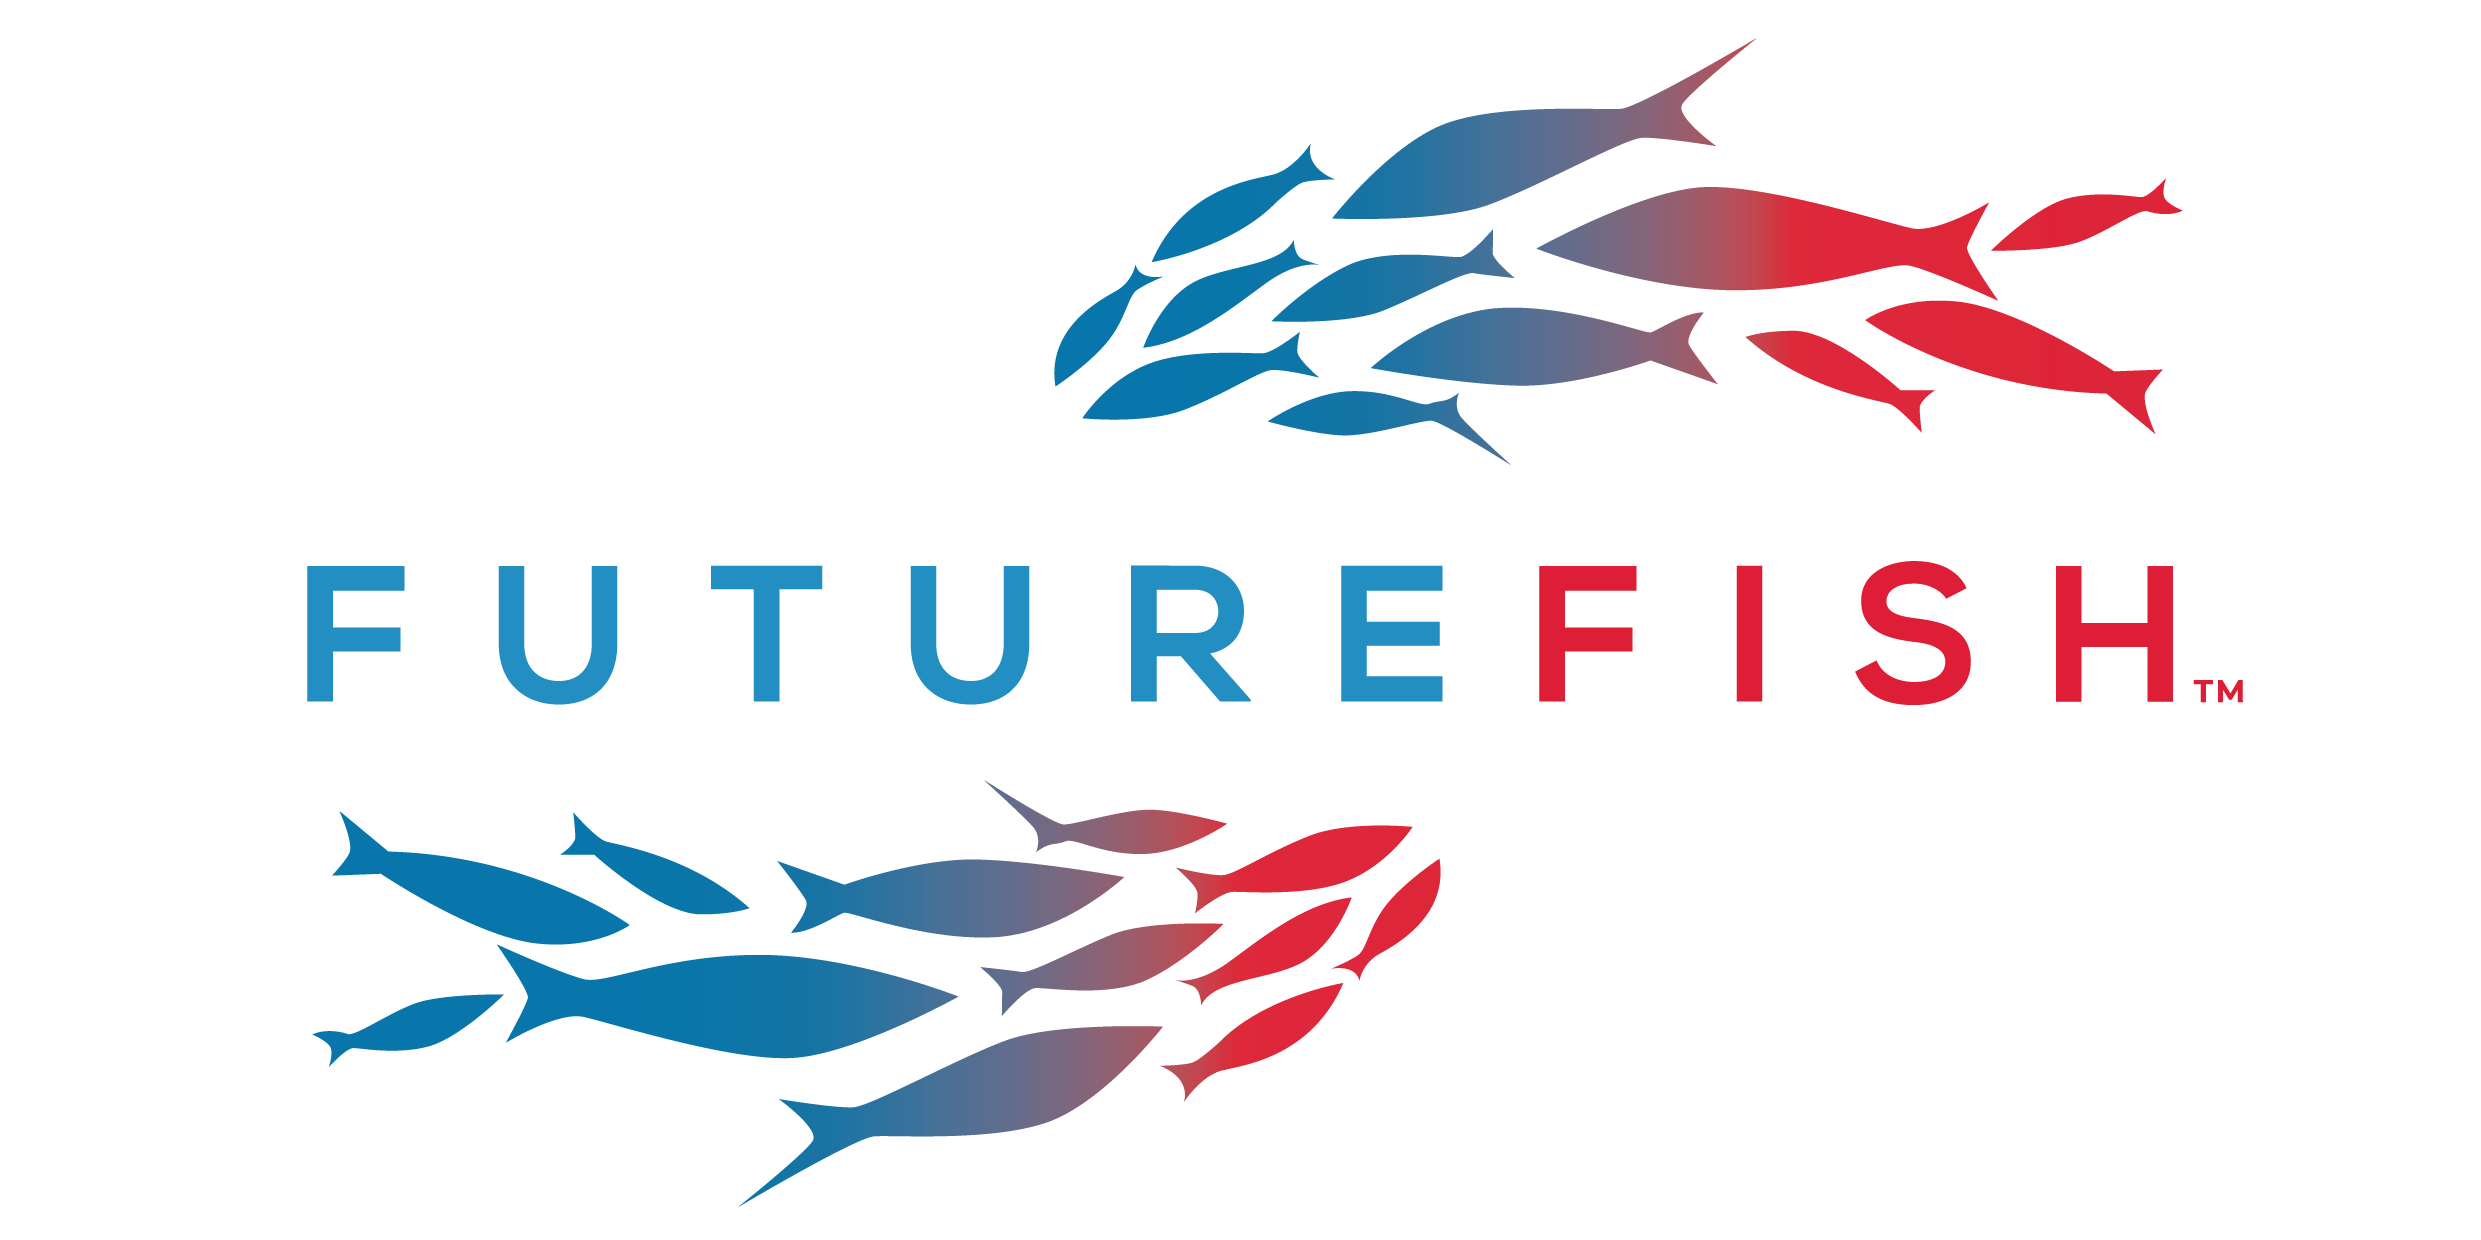 Future Fish logo